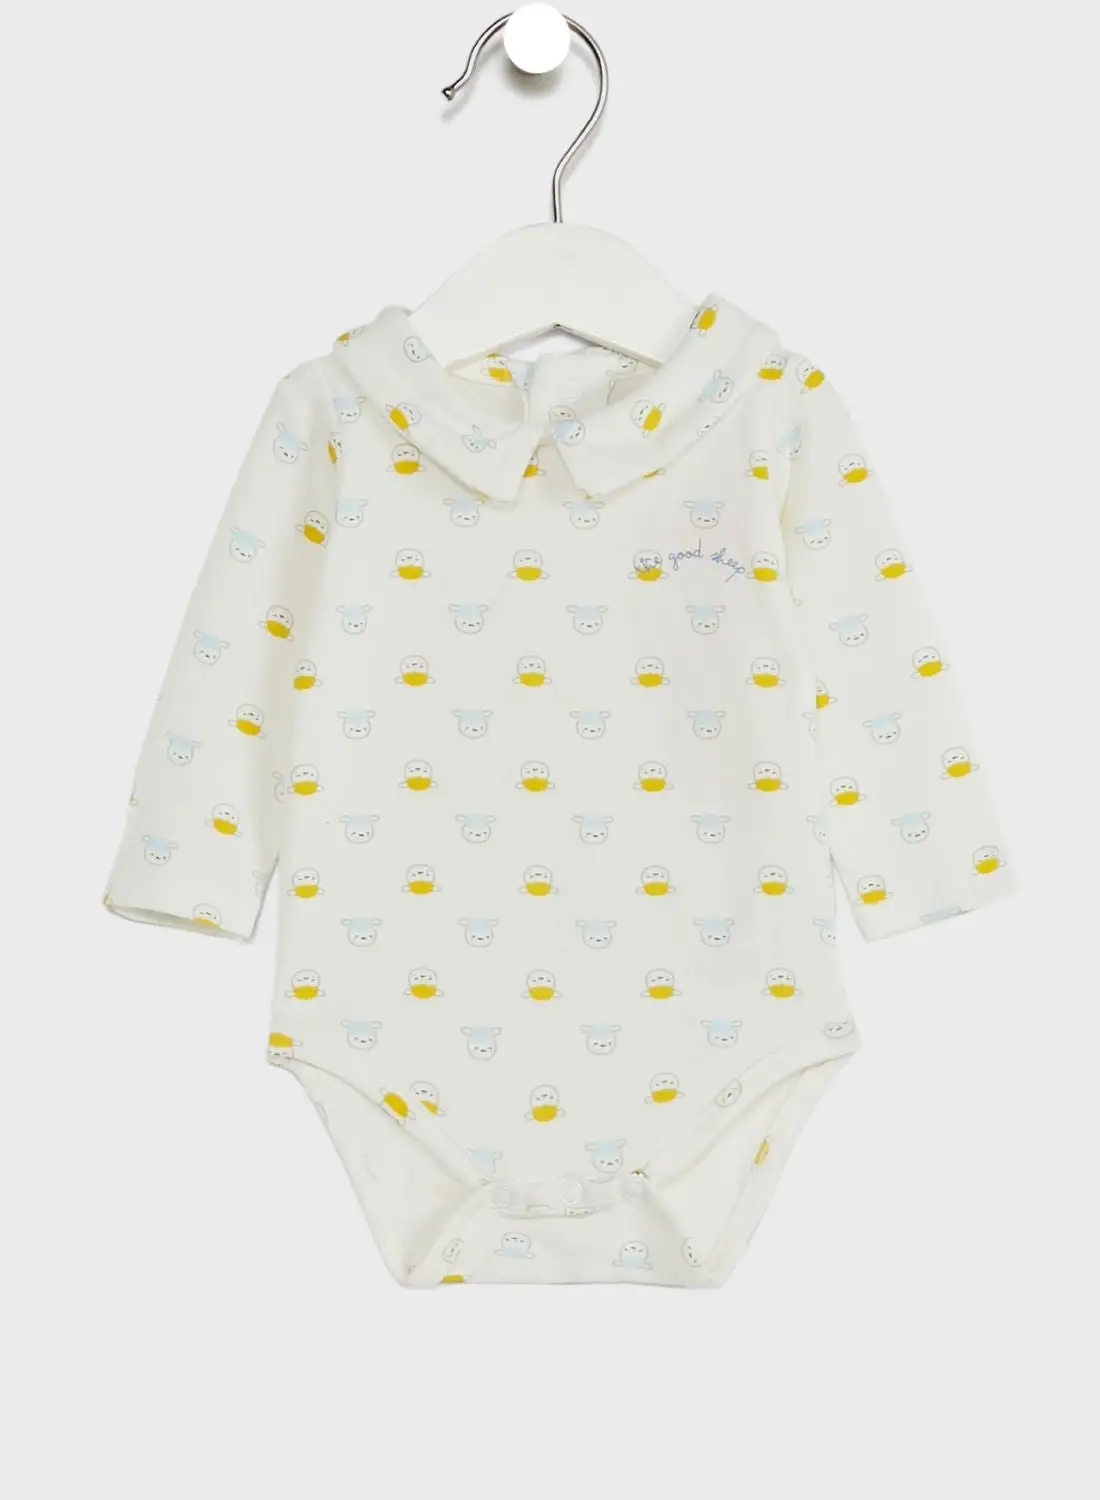 Zippy Infant Printed Bodysuit